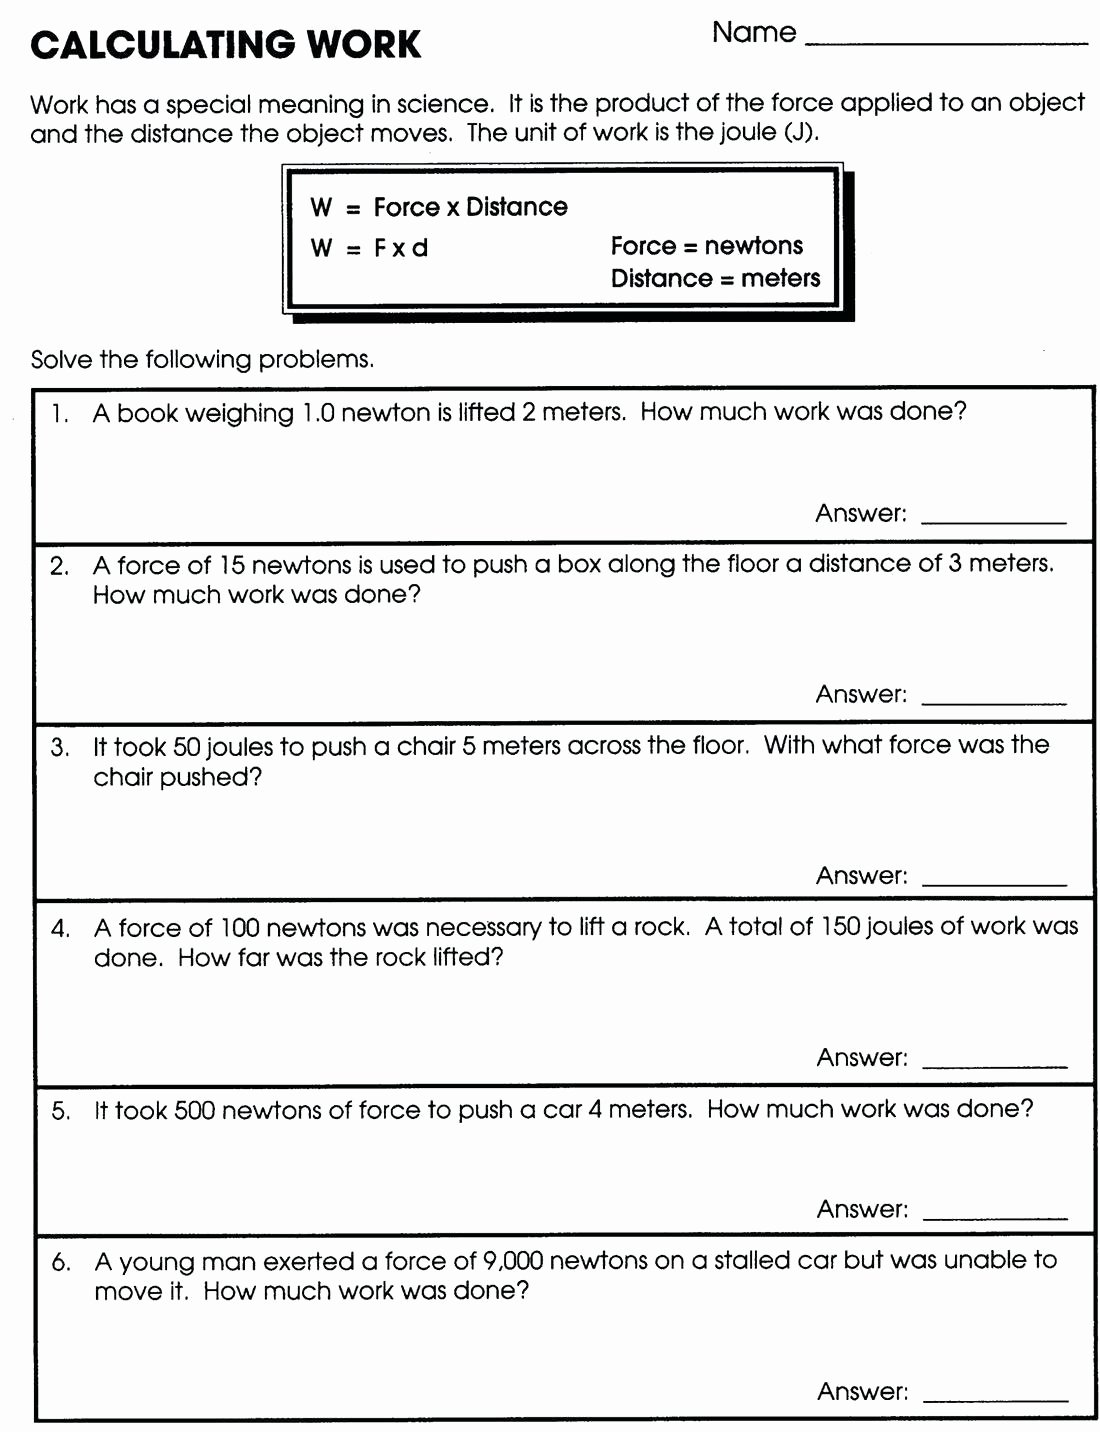 Distance formula Word Problems Worksheet New Distance formula Word Problems Worksheet the Best